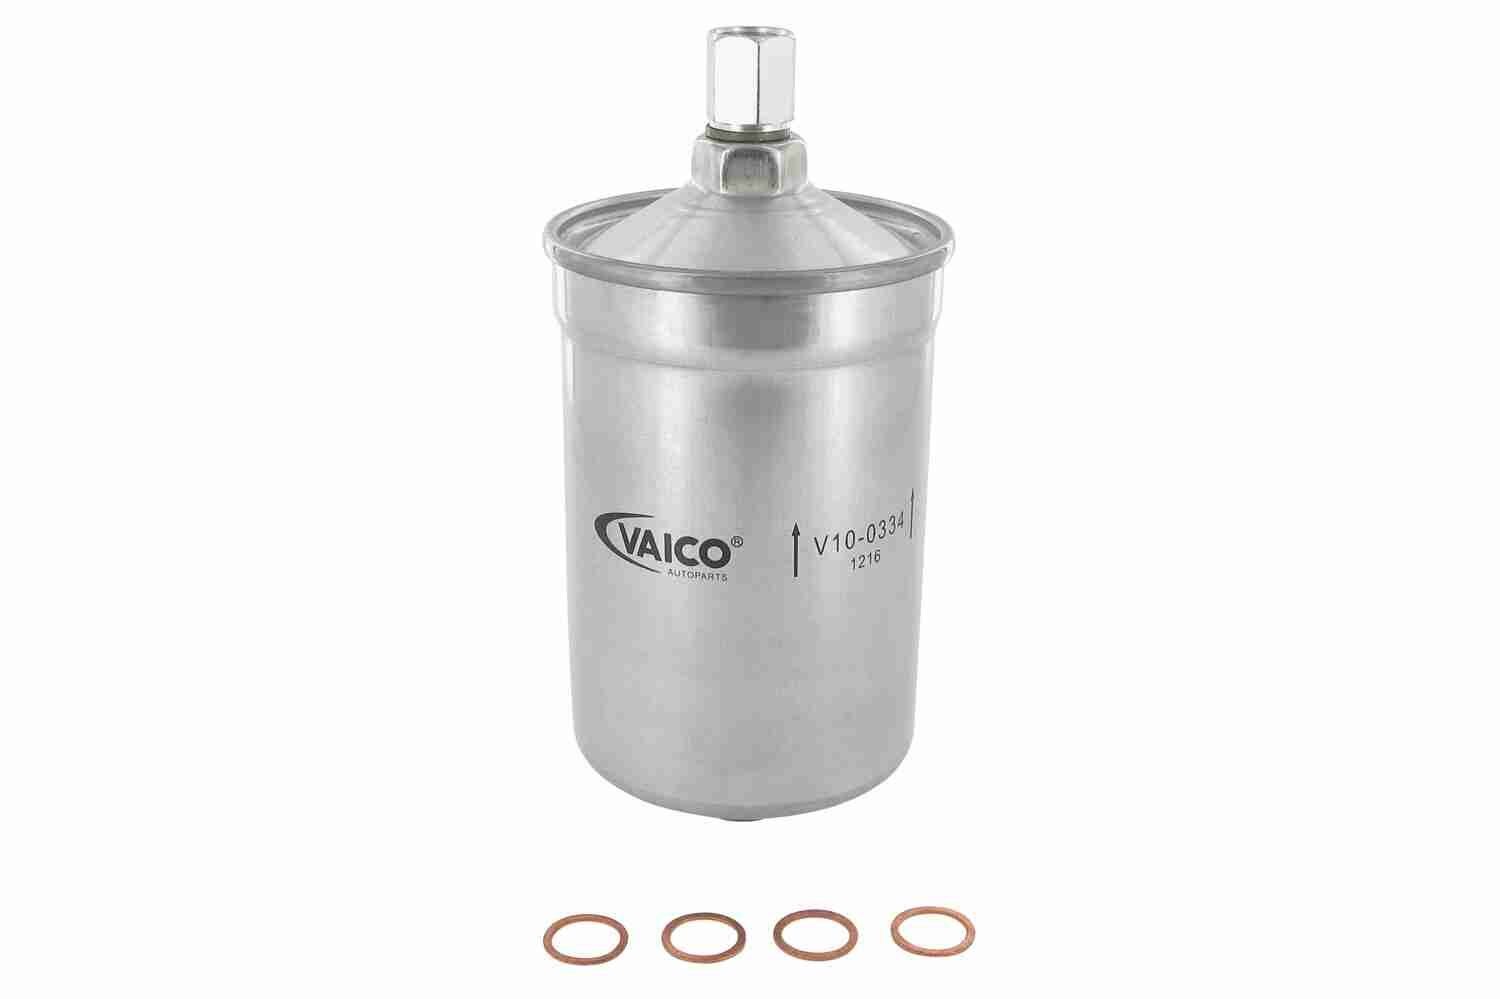 VAICO V10-0334 Fuel filter In-Line Filter, Original VAICO Quality